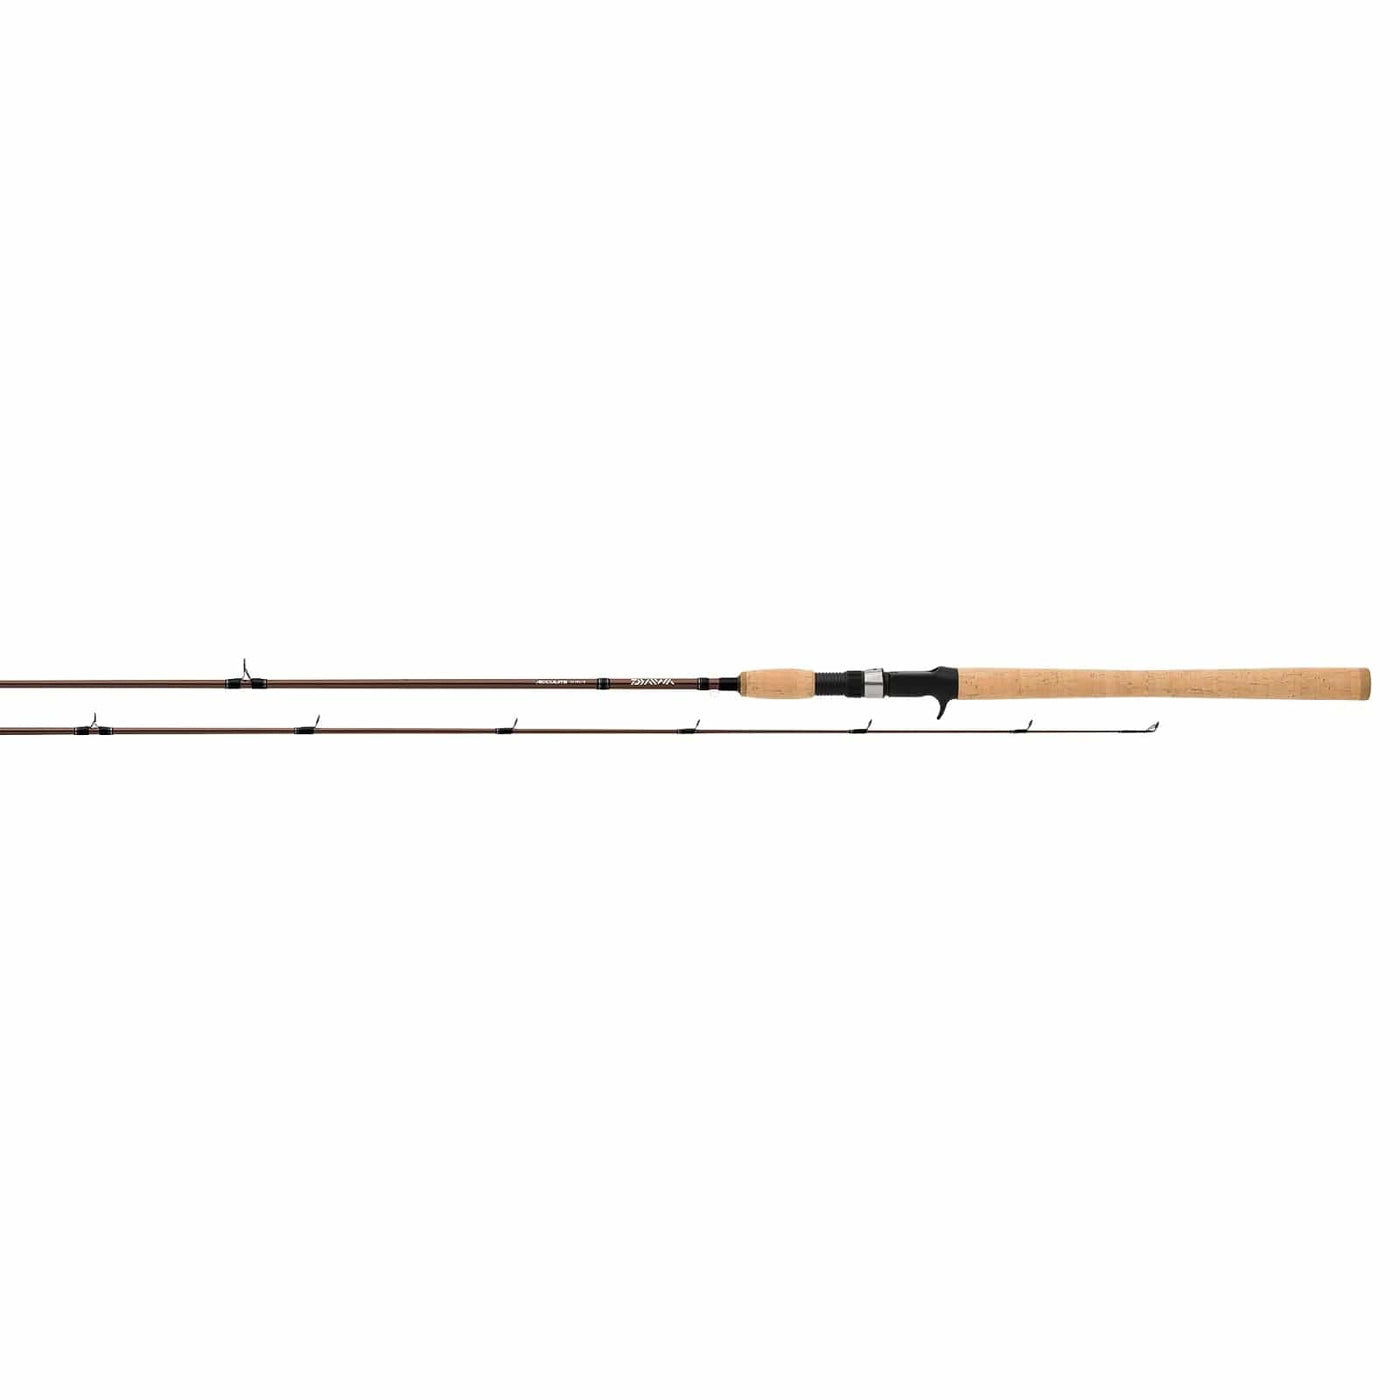 Daiwa Daiwa Acculite Spinning Rod ACLT902MFS 9 ft 2 pc Fishing